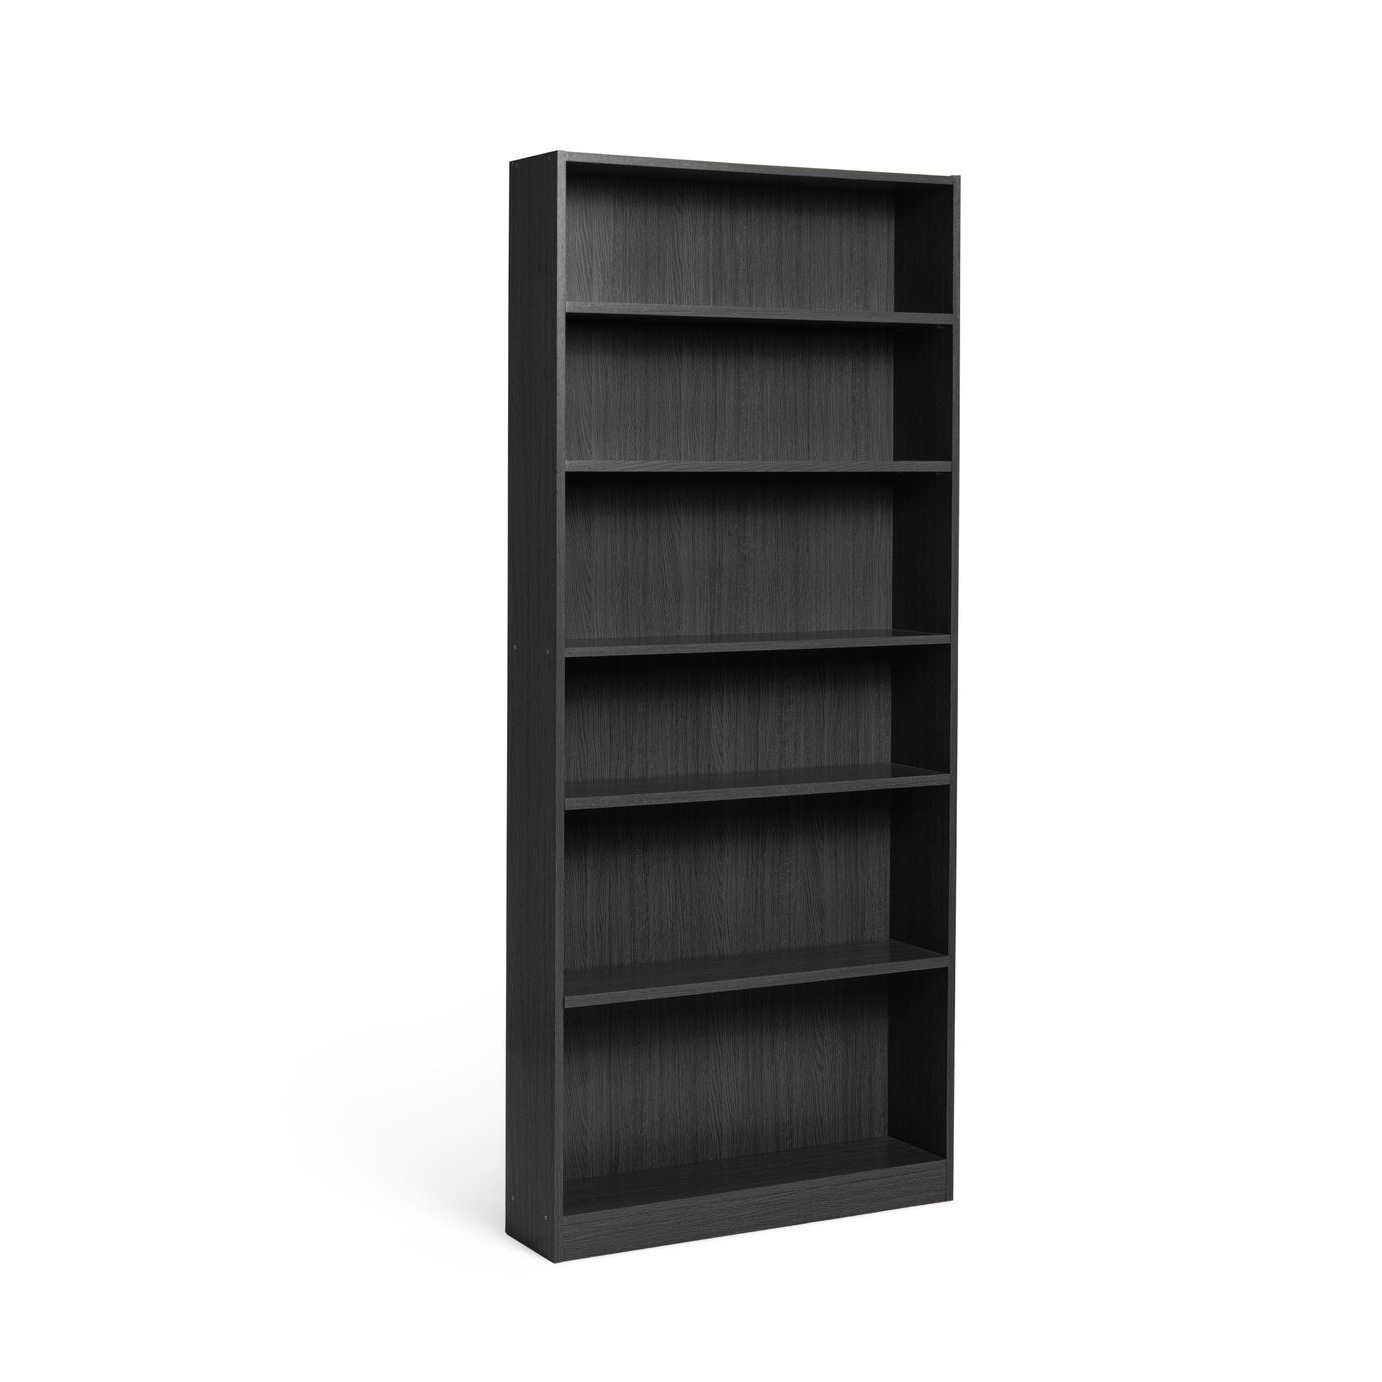 Argos Home Maine Bookcase - Black - image 1